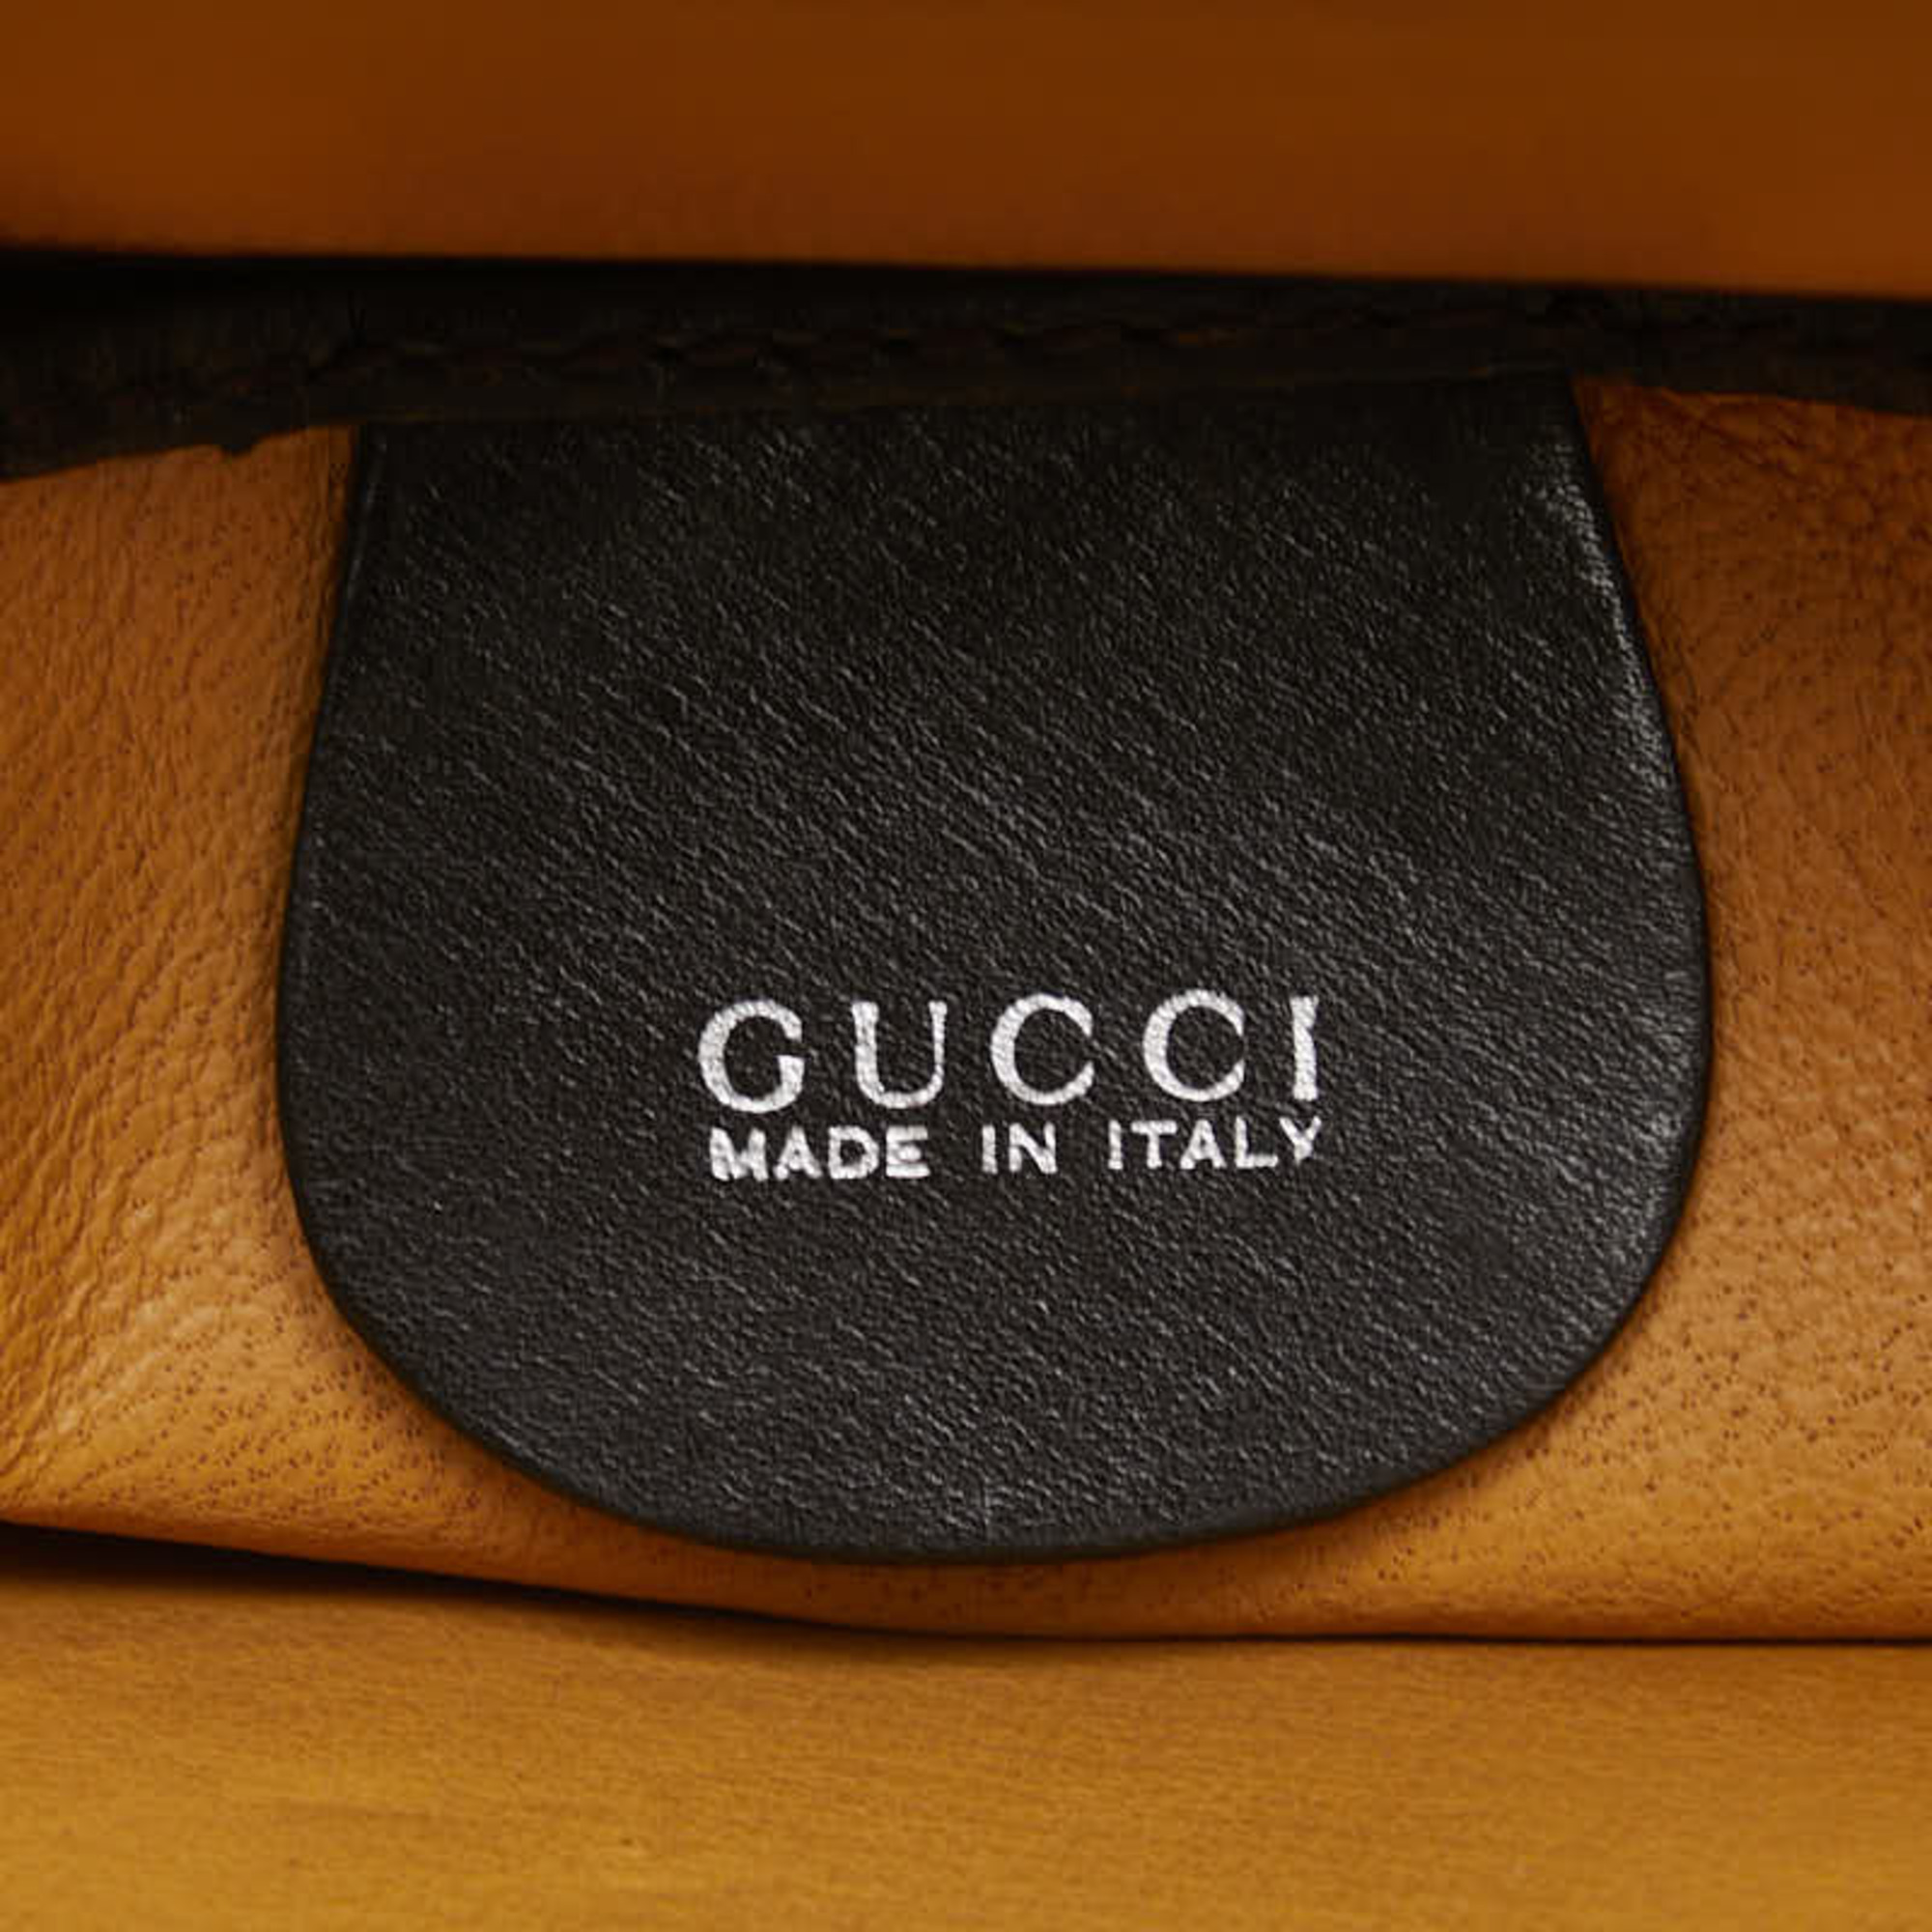 Gucci G-lock G hardware bag handbag 007 406 0265 brown leather women's GUCCI